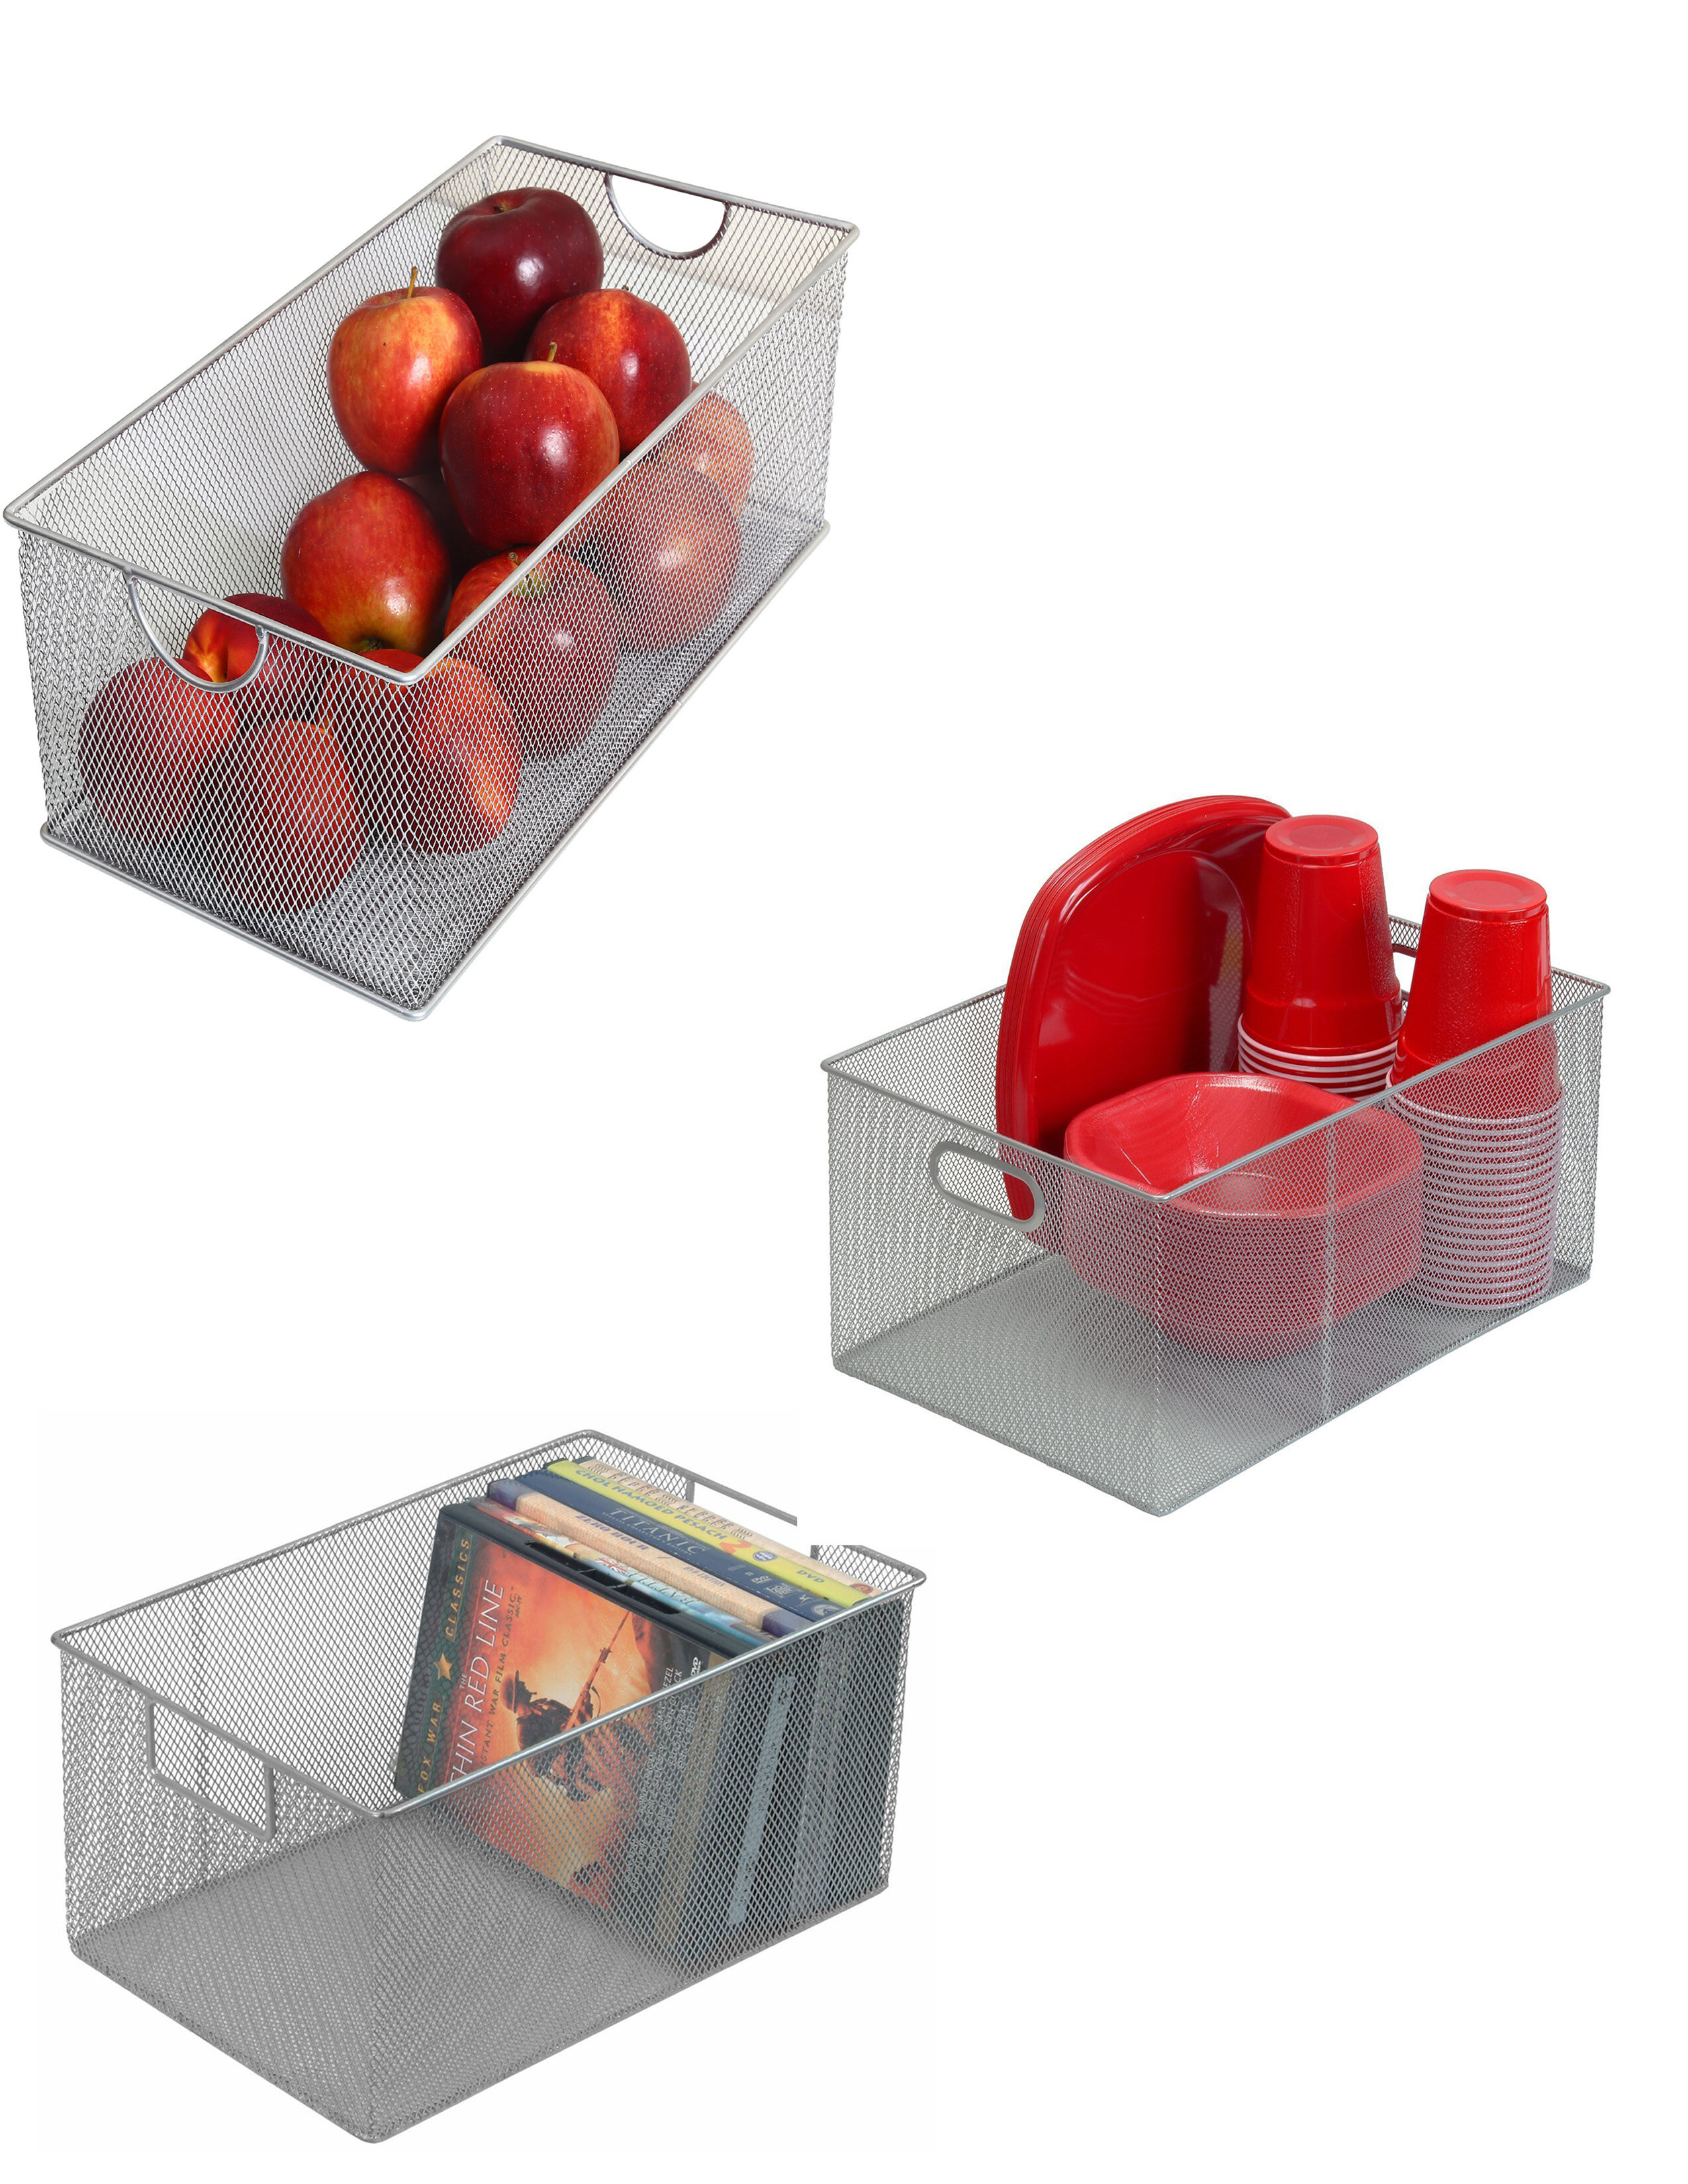 Pantry Items Toys Vegetables Silver Mesh Open Bin Storage Basket Organizer for Fruits Etc.